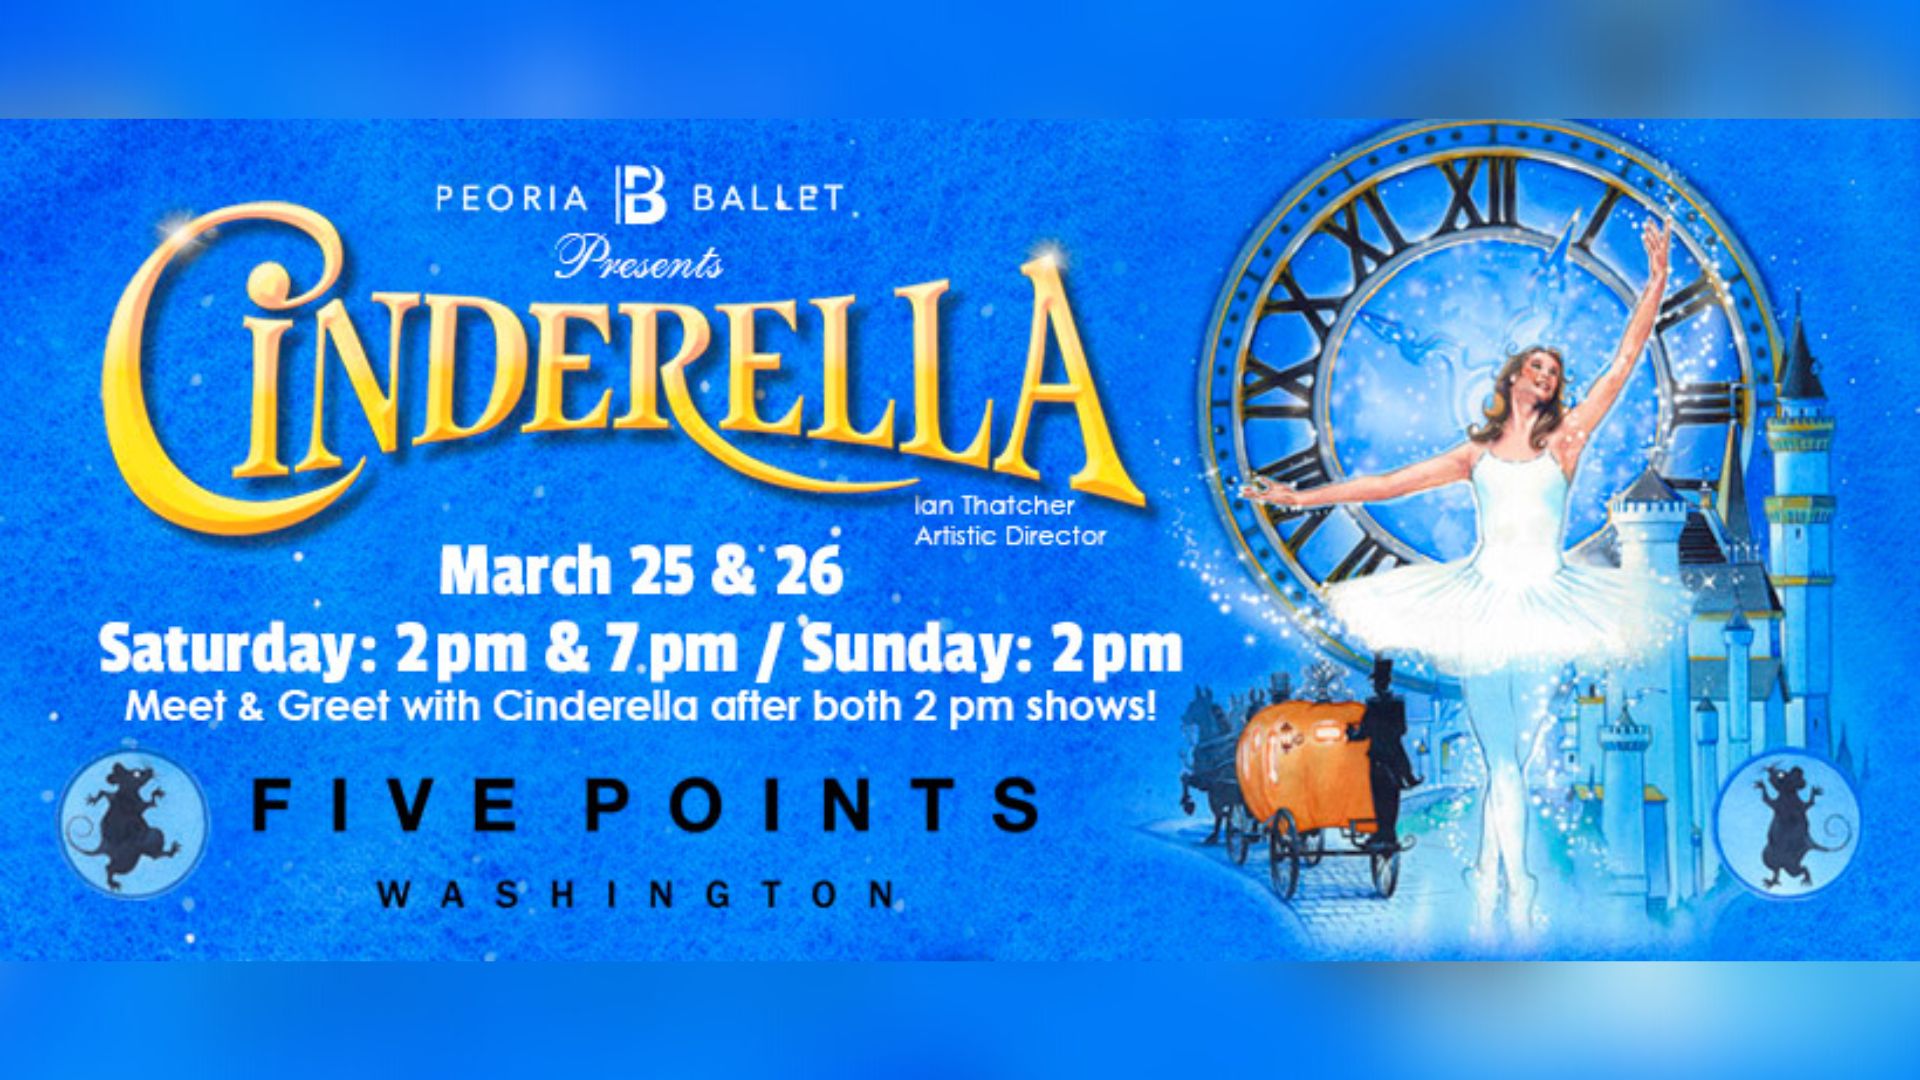 Peoria Ballet Cinderella Event Poster